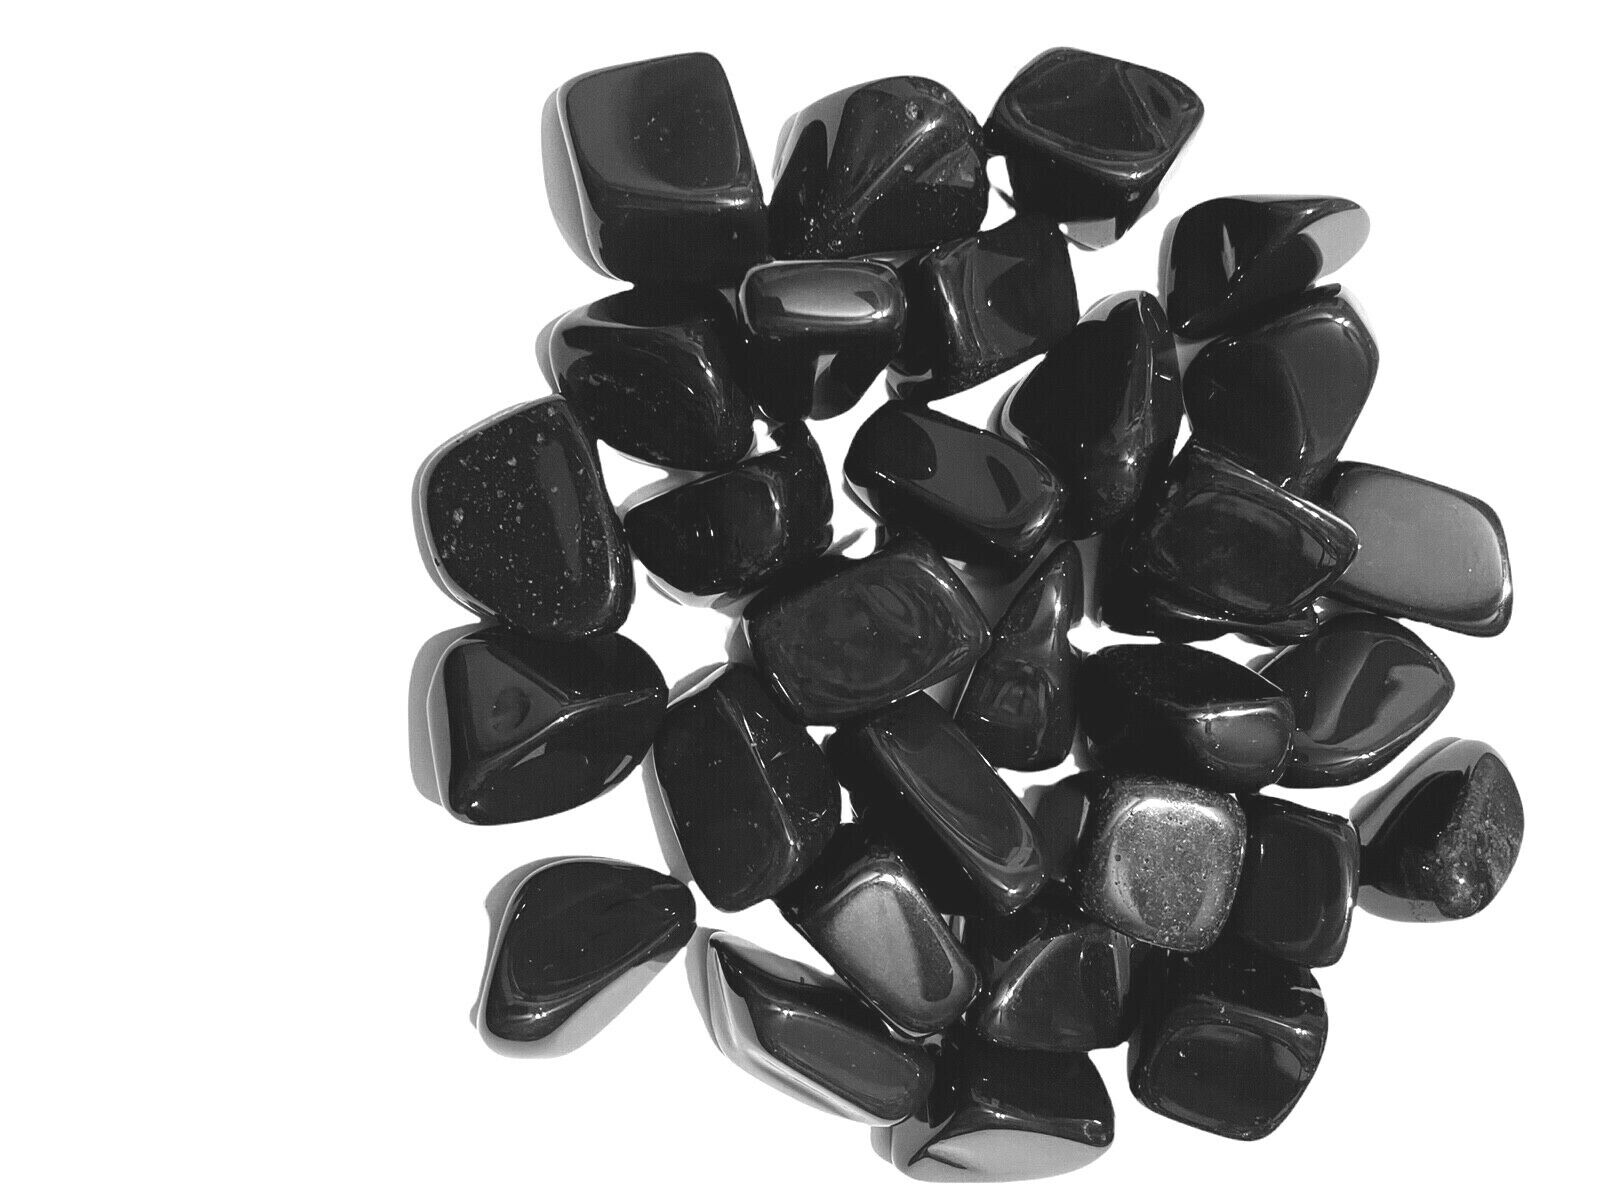 4oz Black Onyx Tumbled Stones Small 10-20mm Reiki Healing Crystals Memory Focus